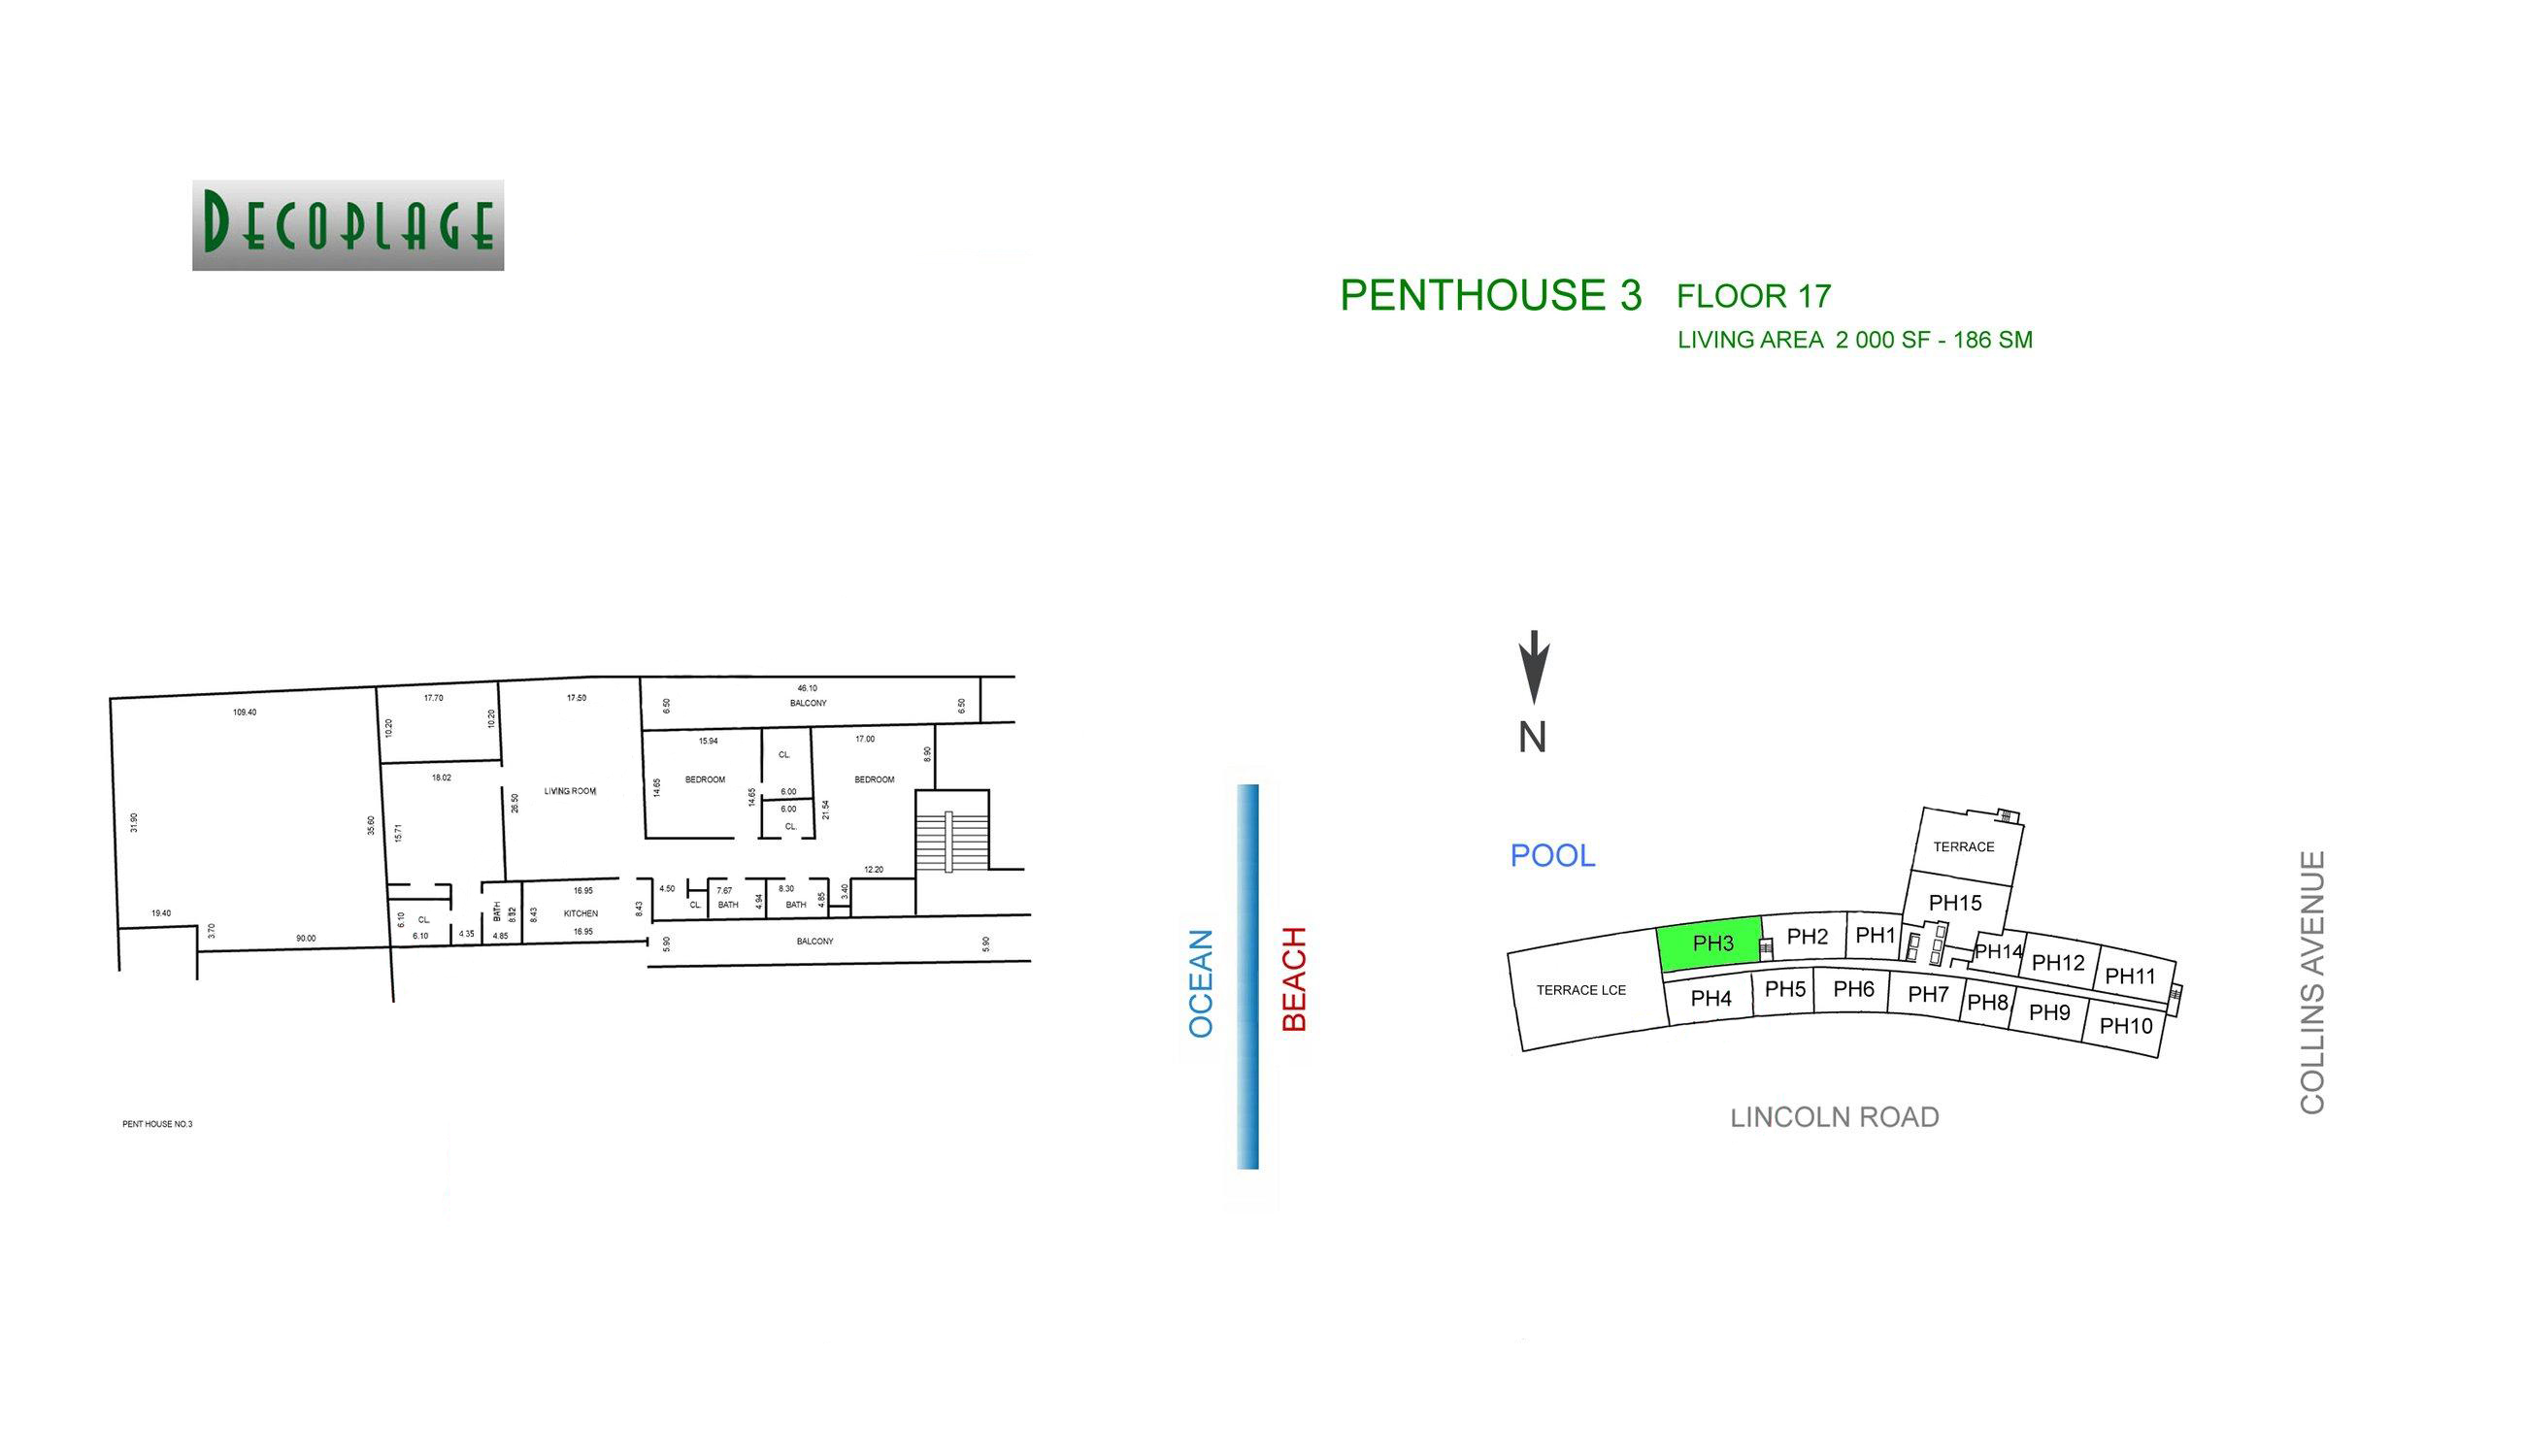 Decoplage Penthouse 3 Floors 17